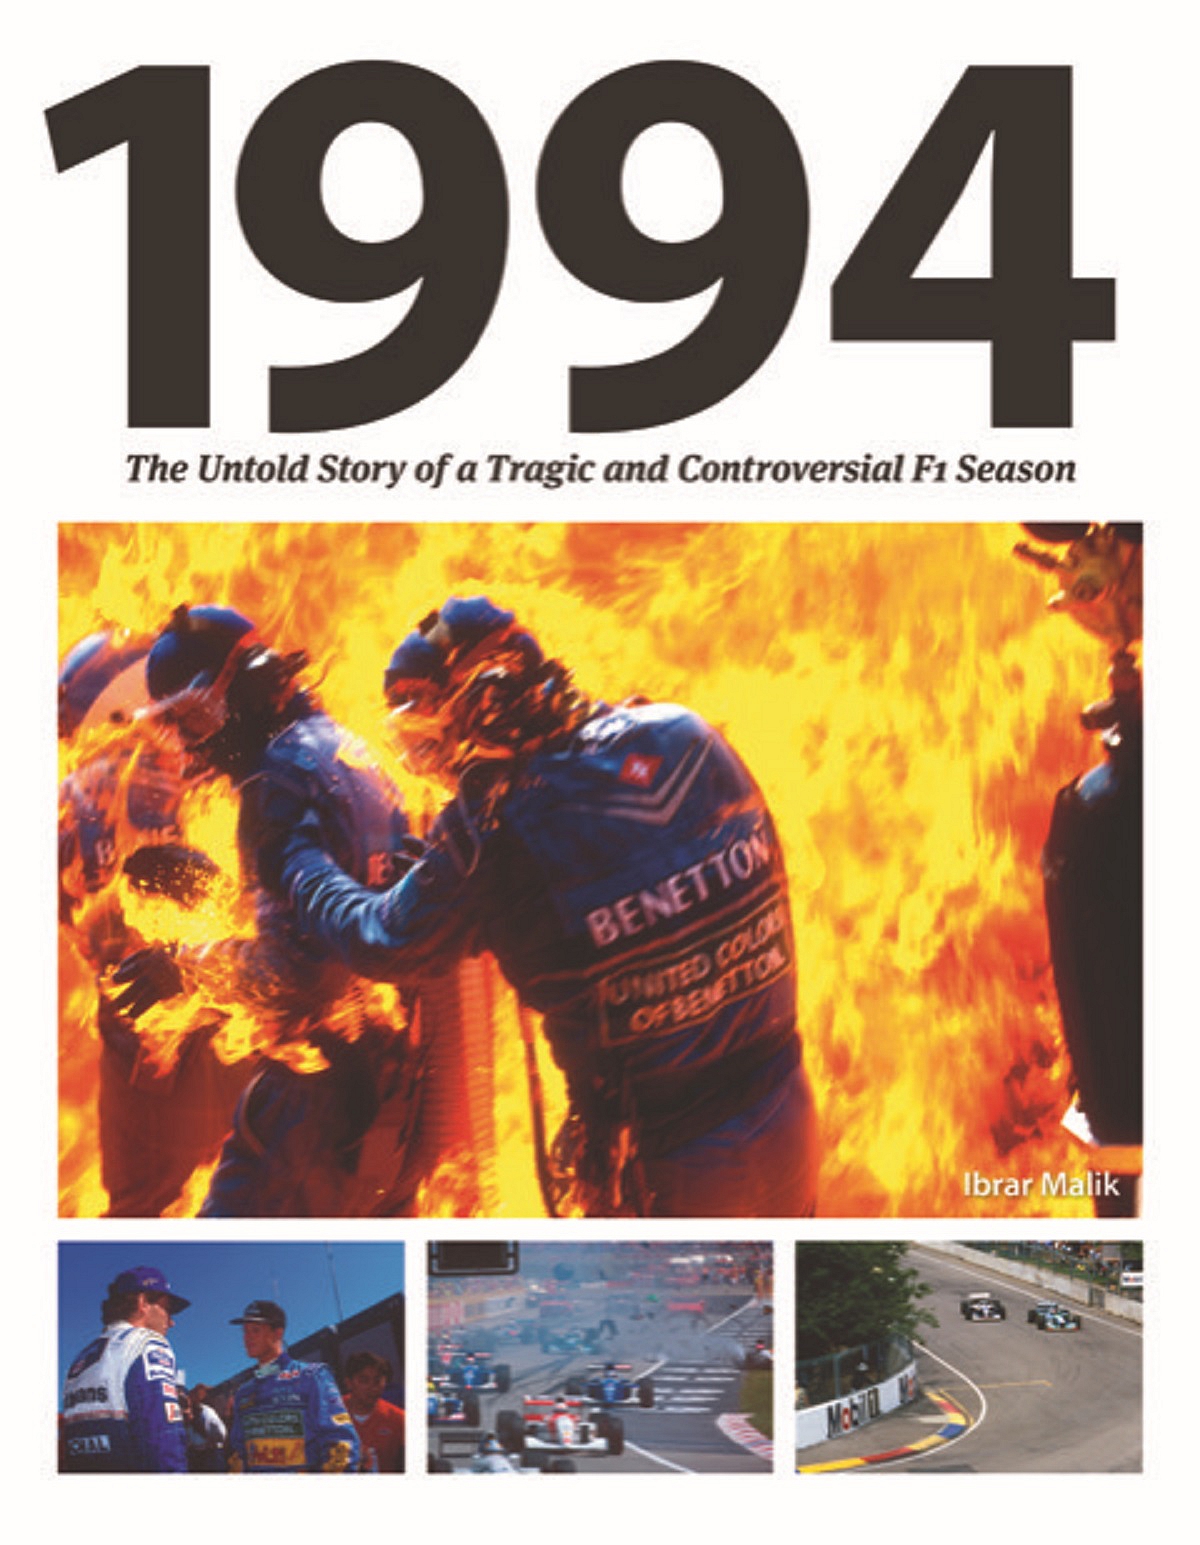 1994-F1-cover.jpg